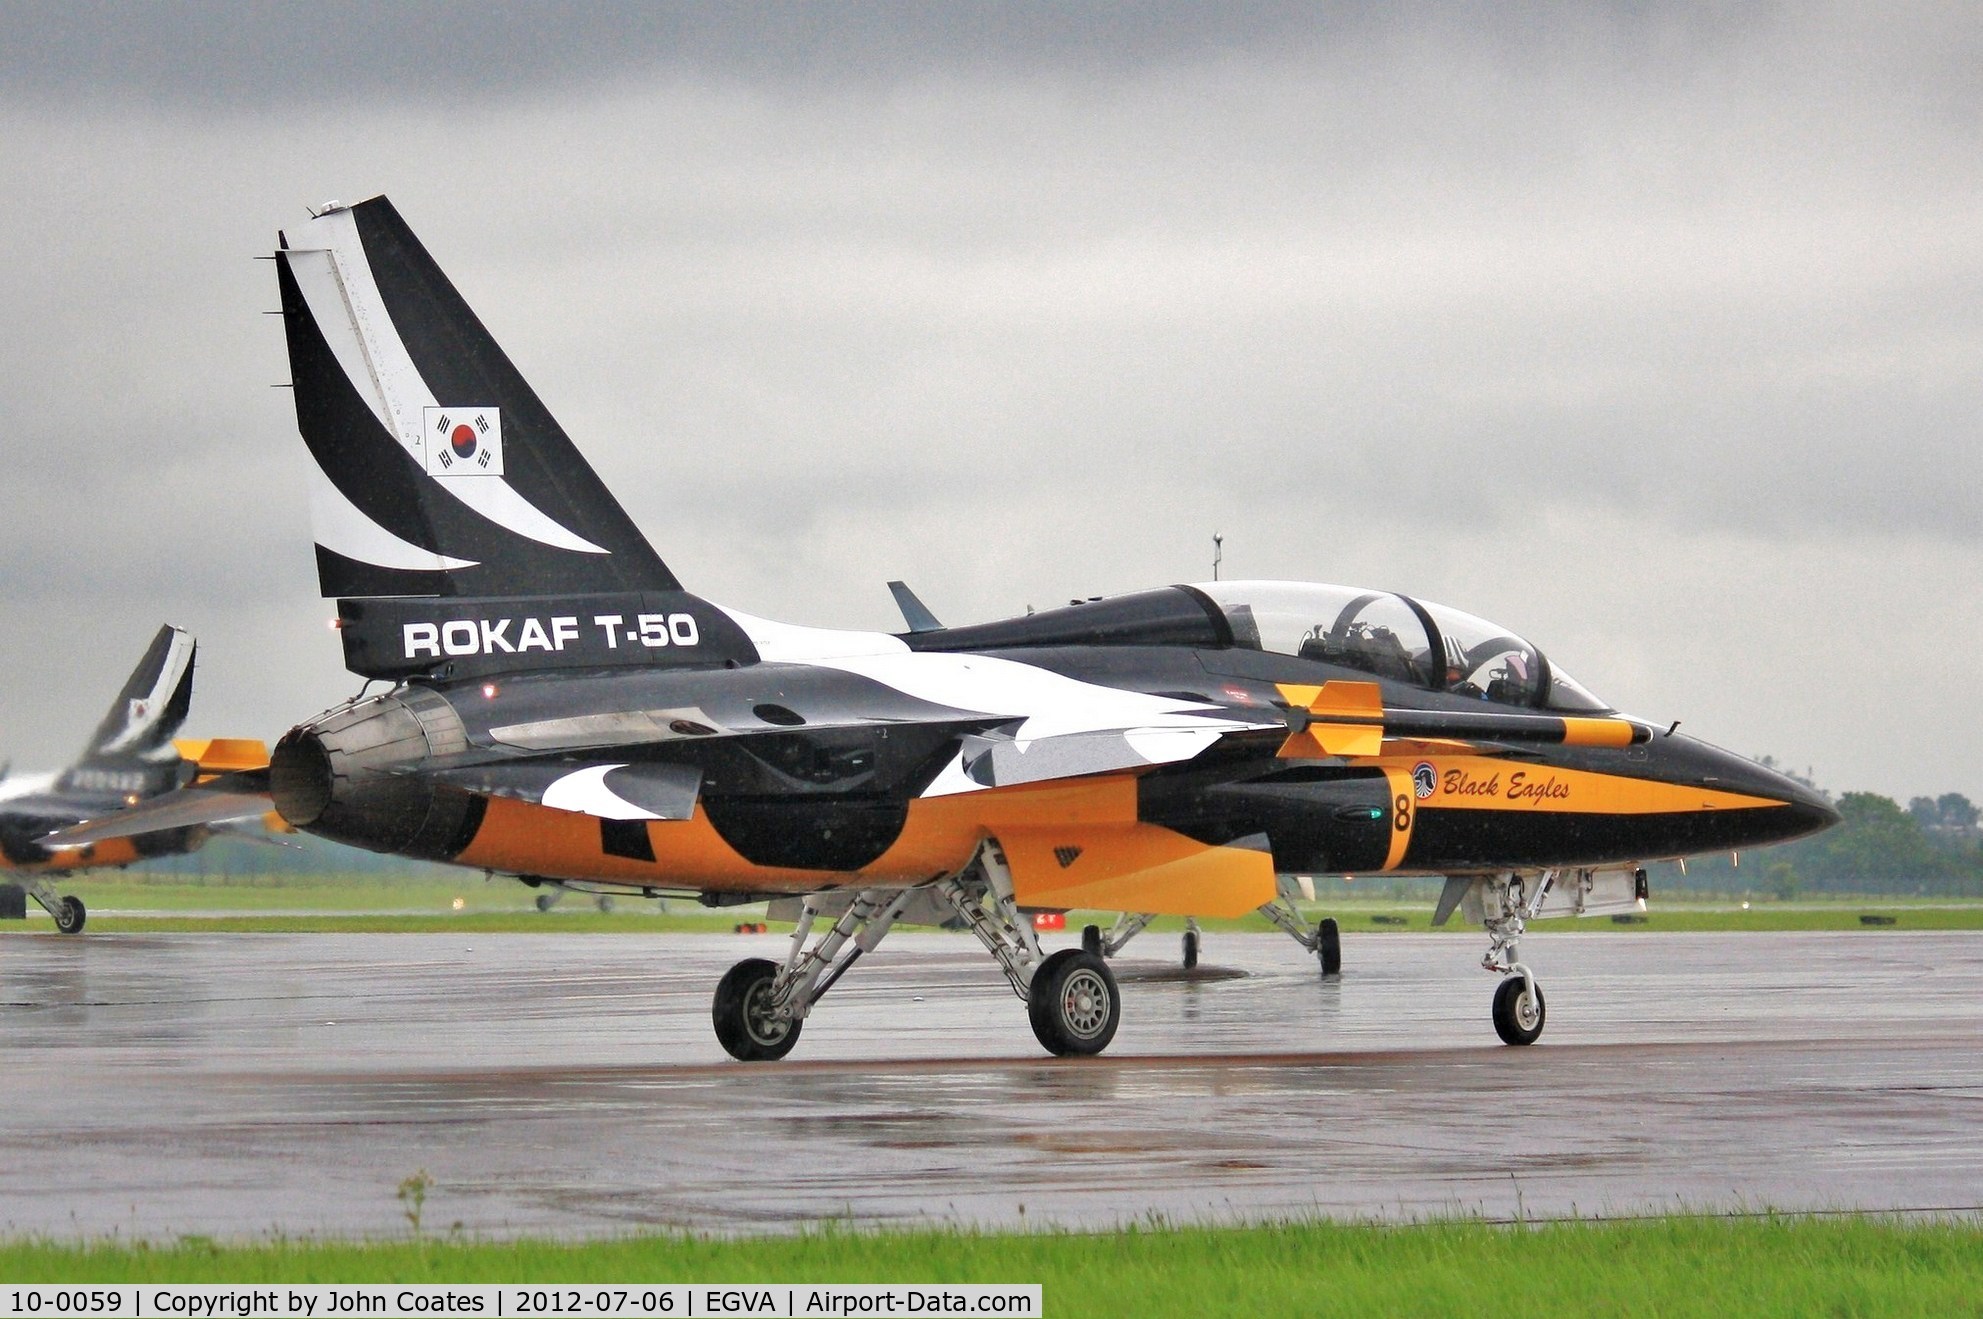 10-0059, 2010 Korean Aerospace Industries T-50B Golden Eagle C/N KA-059, Wet RIAT practice